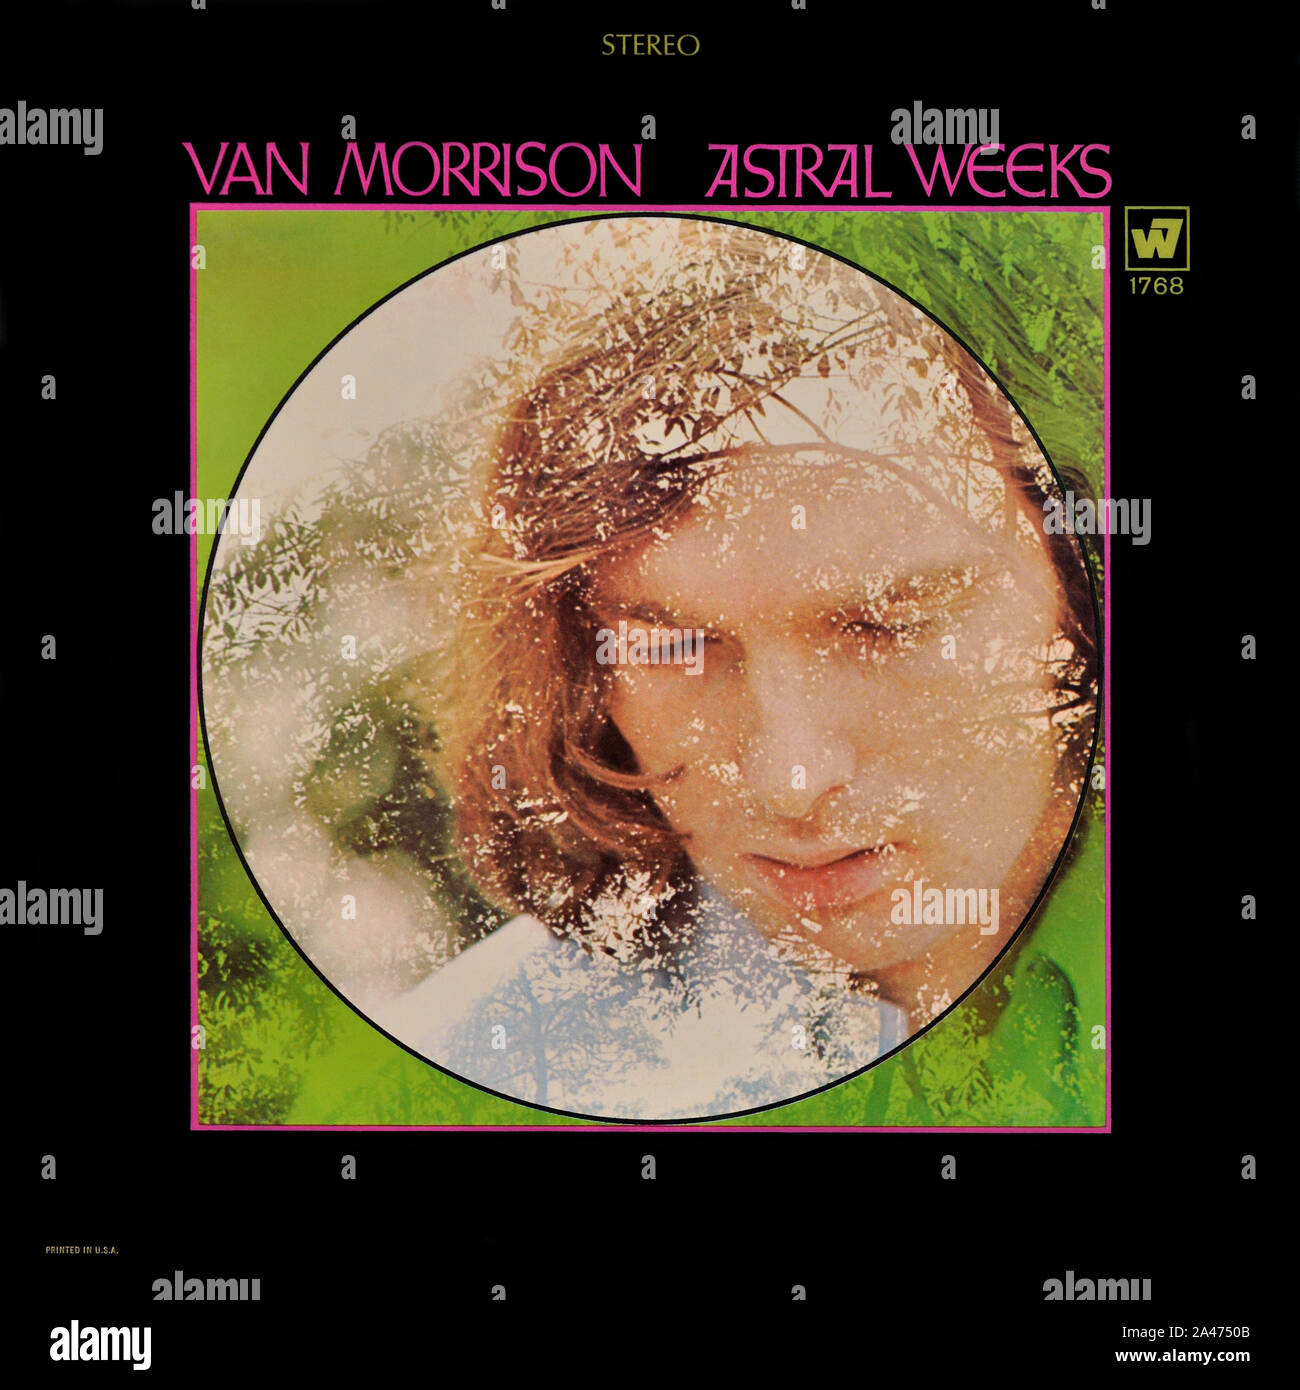 Van Morrison - copertina originale dell'album in vinile - Astral Weeks - 1968 Foto Stock